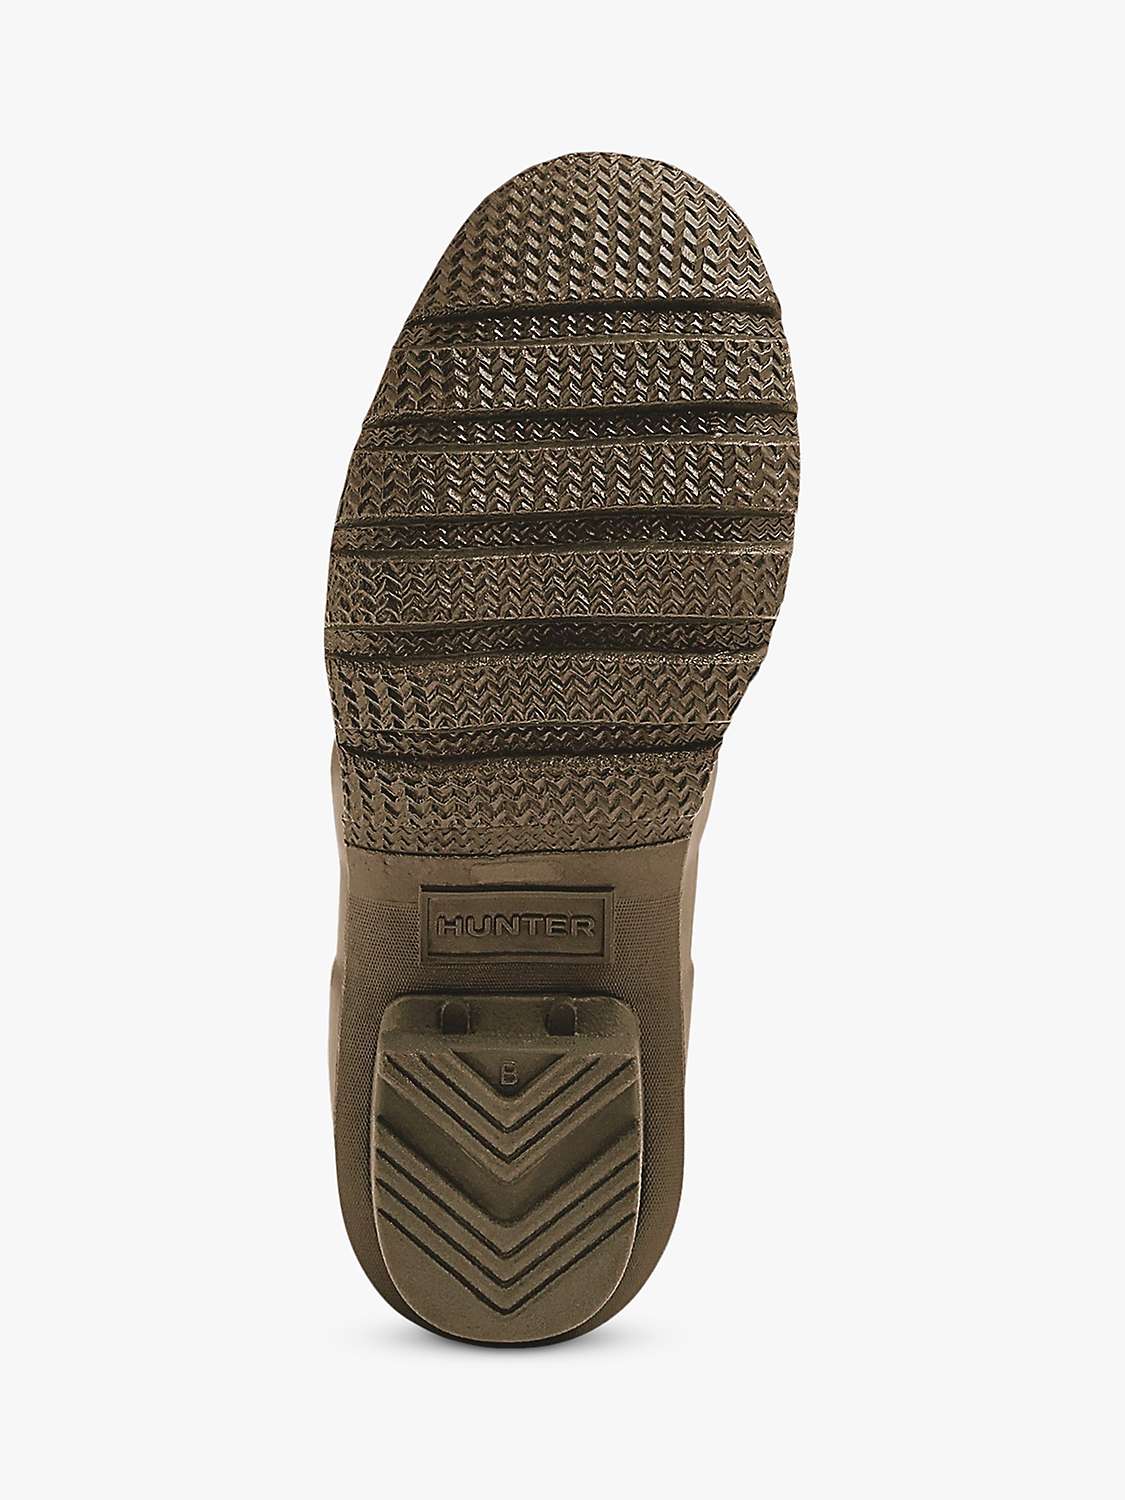 Buy Hunter Original Short Wellington Boots Online at johnlewis.com